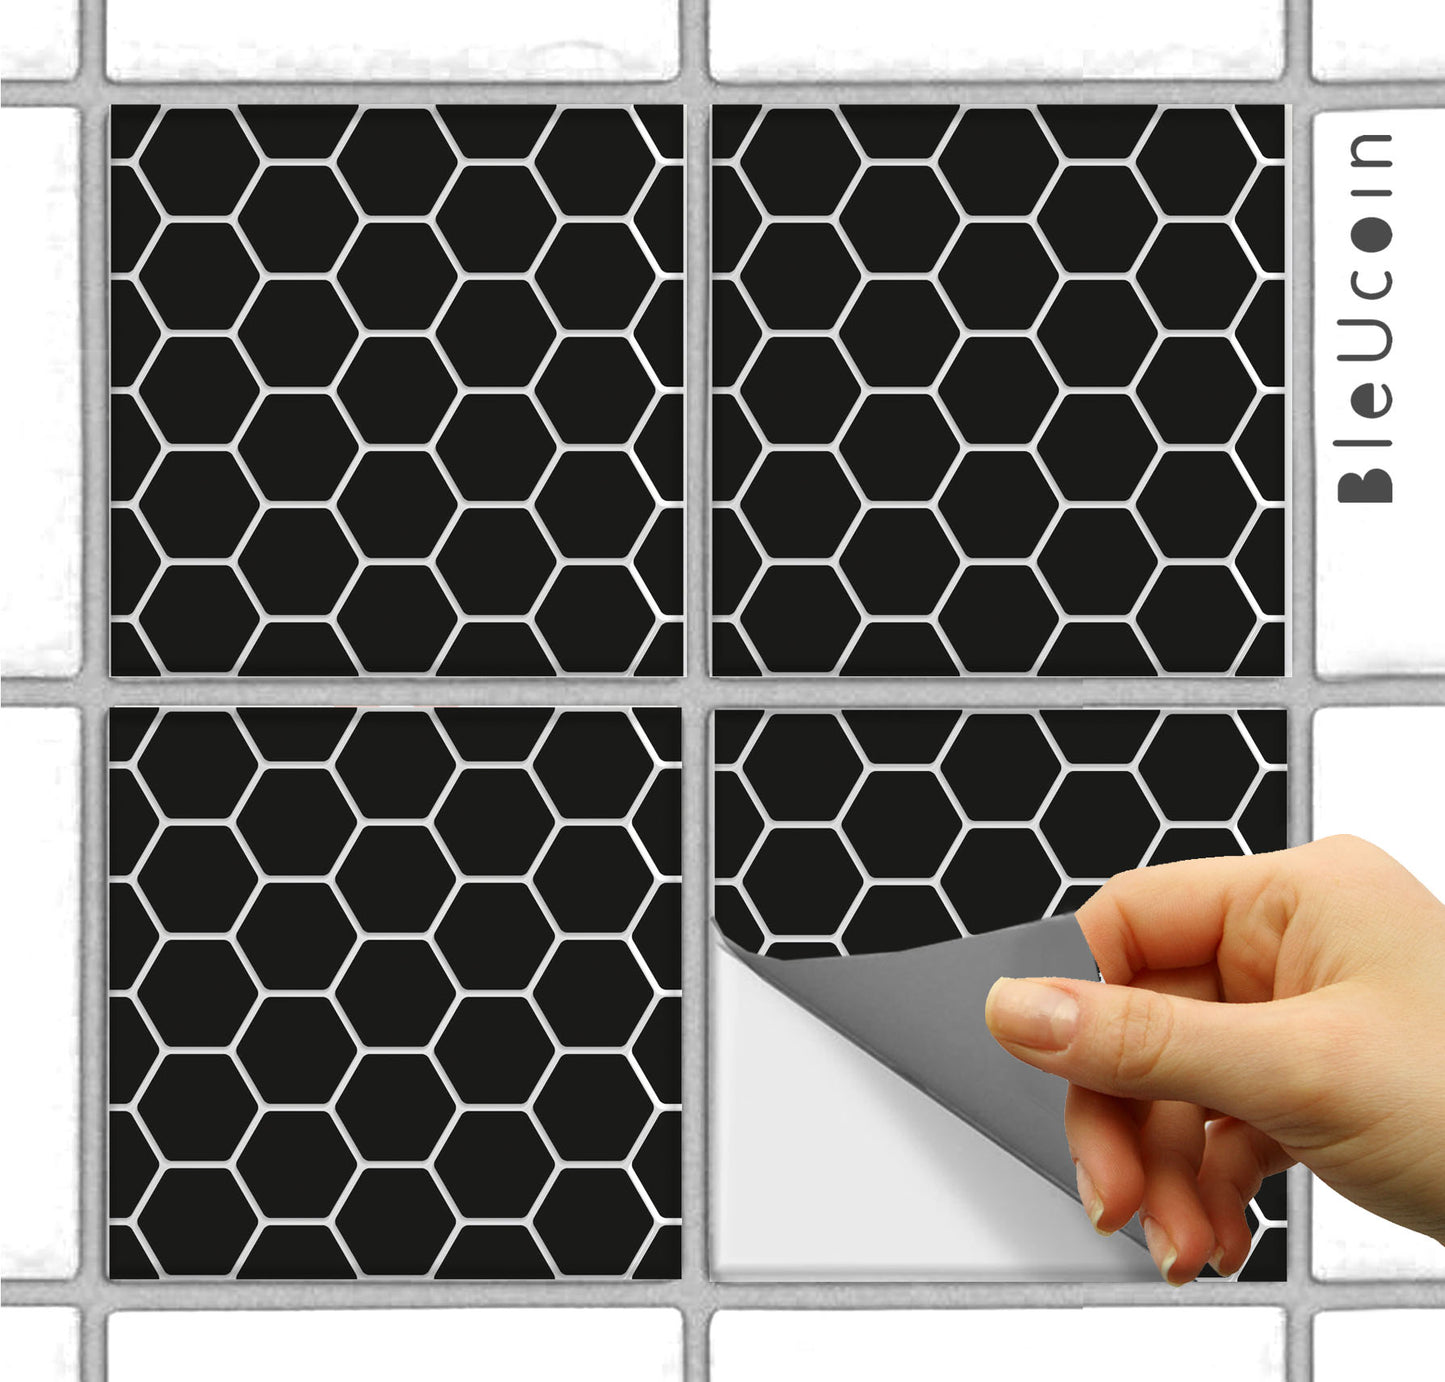 Iwaki Black hexagon peel & stick tile